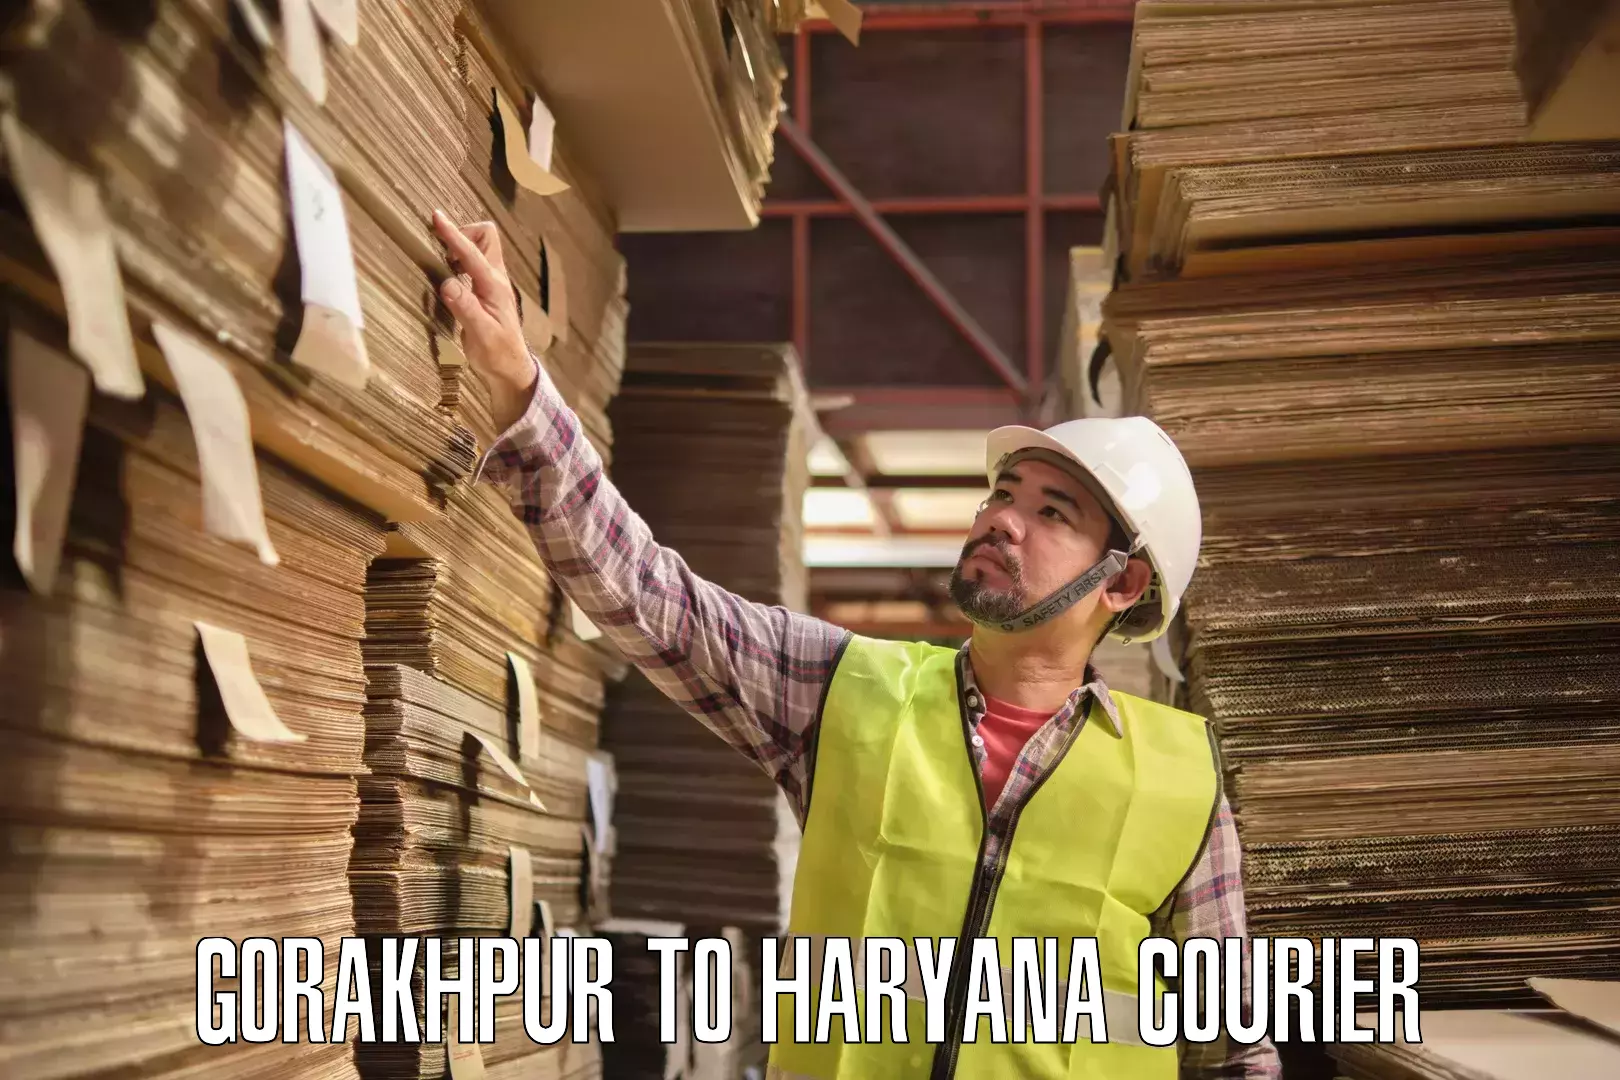 Advanced shipping network Gorakhpur to Haryana